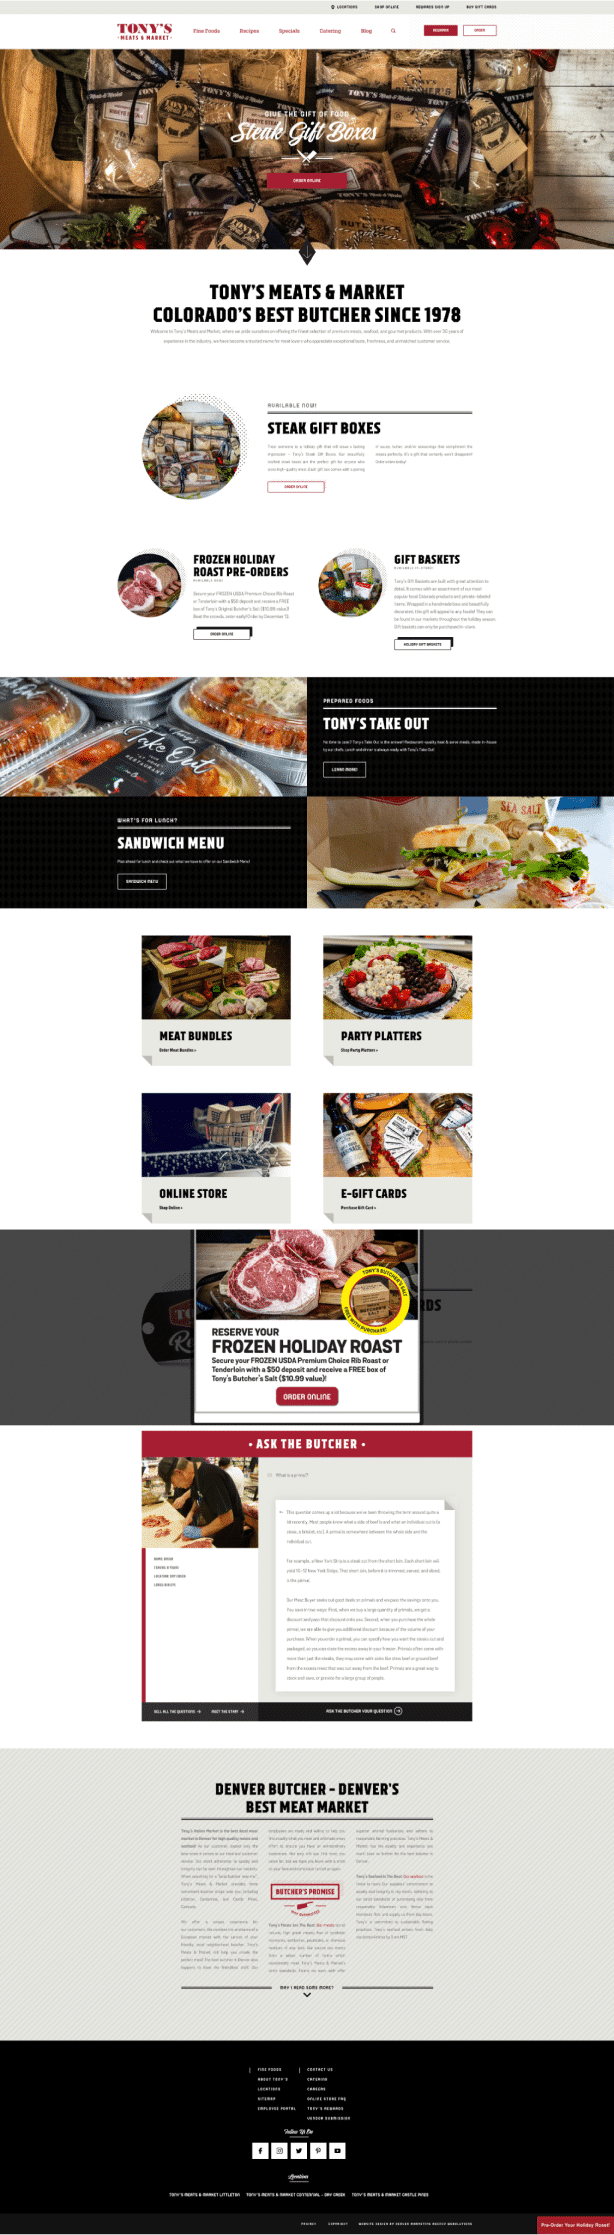 Tony's Meats & Market Website Design, Development, and Marketing by Webolutions Digital Marketing Agency